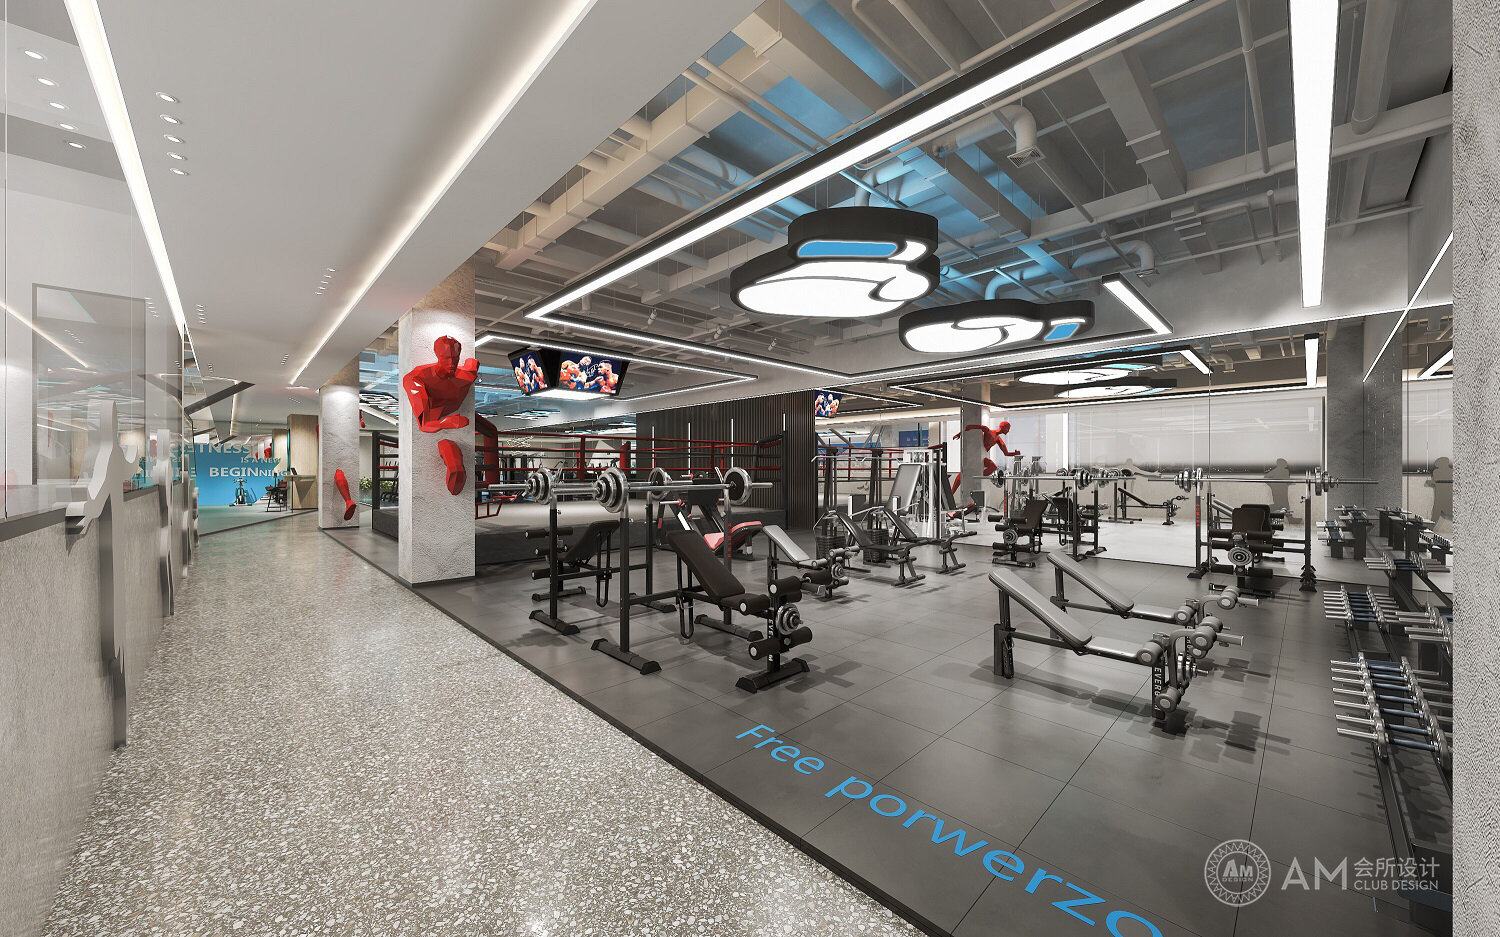 Am design | free weight area design of Hefei Gymnasium